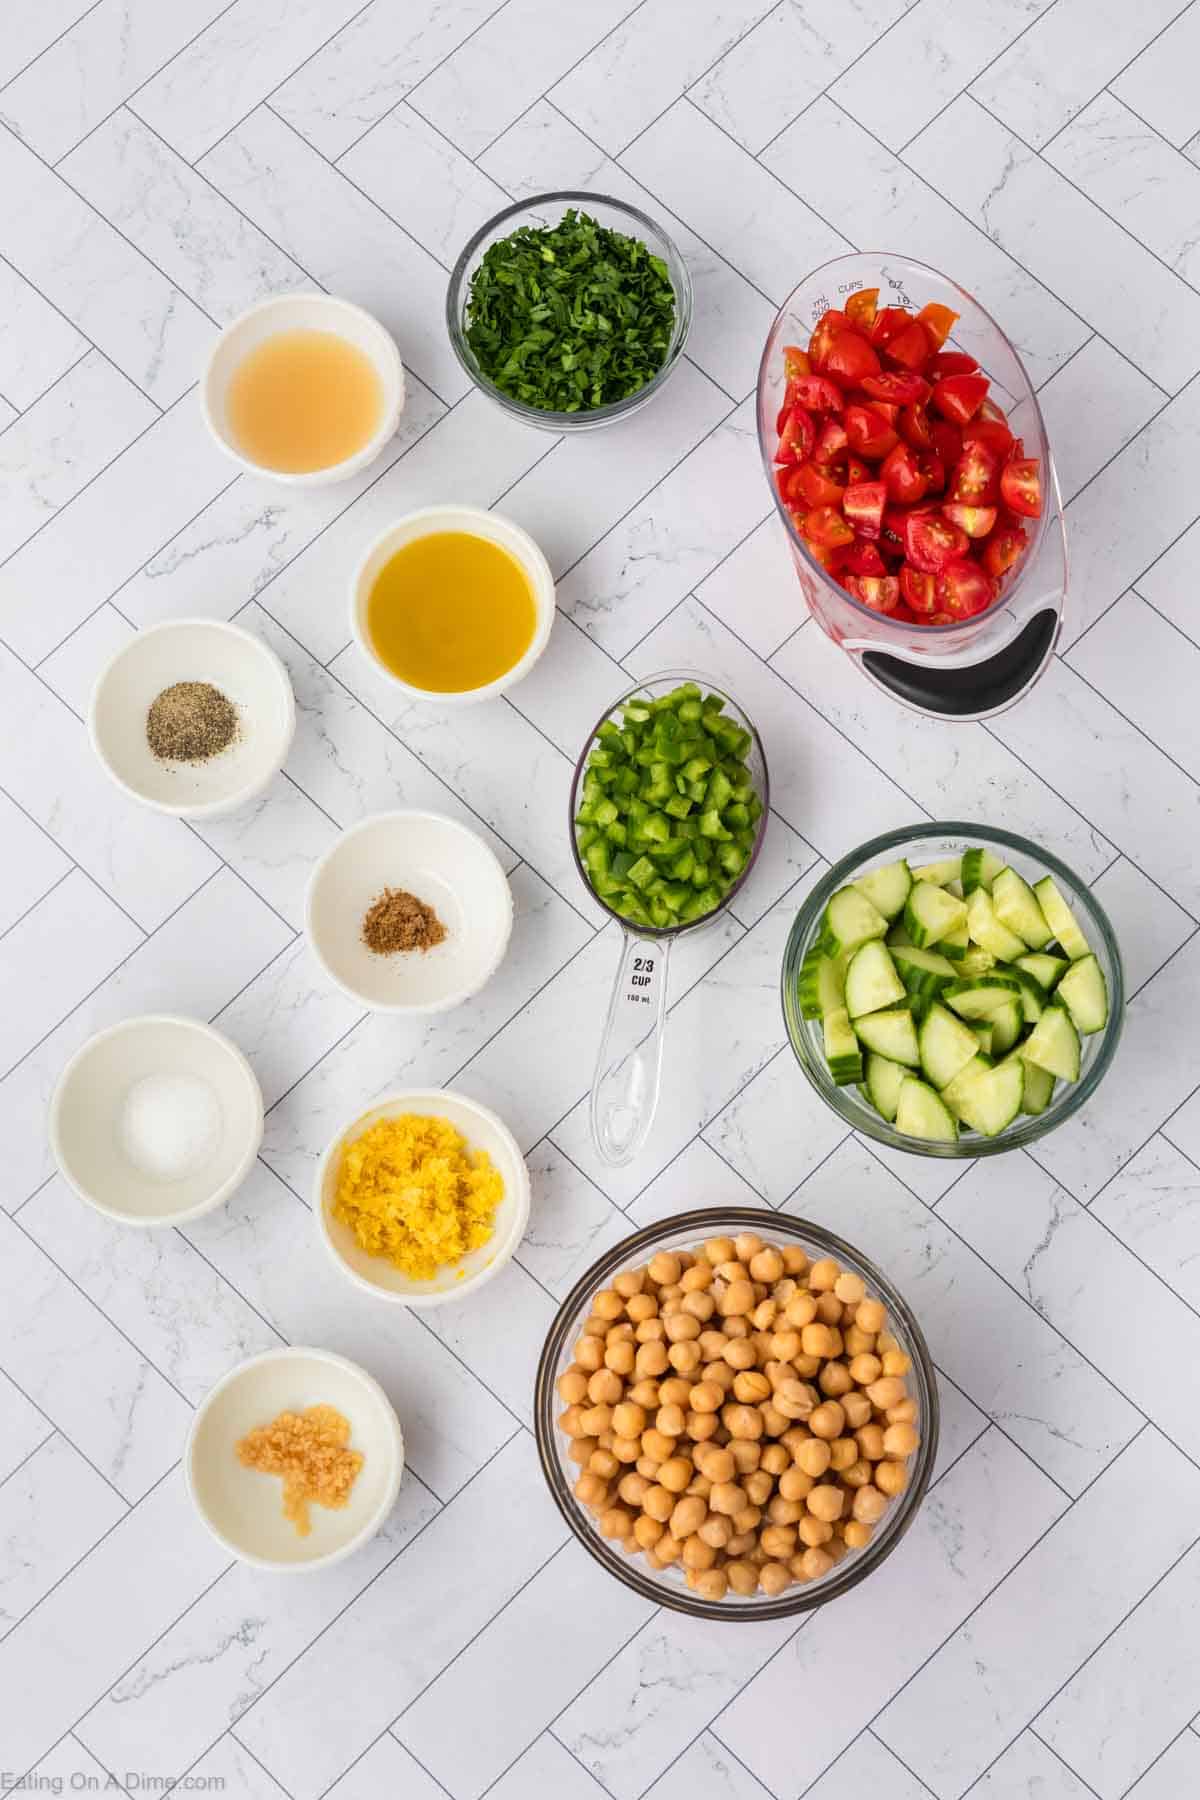 Ingredients - Chickpeas, parsley, cucumber, grape tomatoes, bell pepper, olive oil, garlic minced, lemon juice, lemon, cumin, salt, pepper